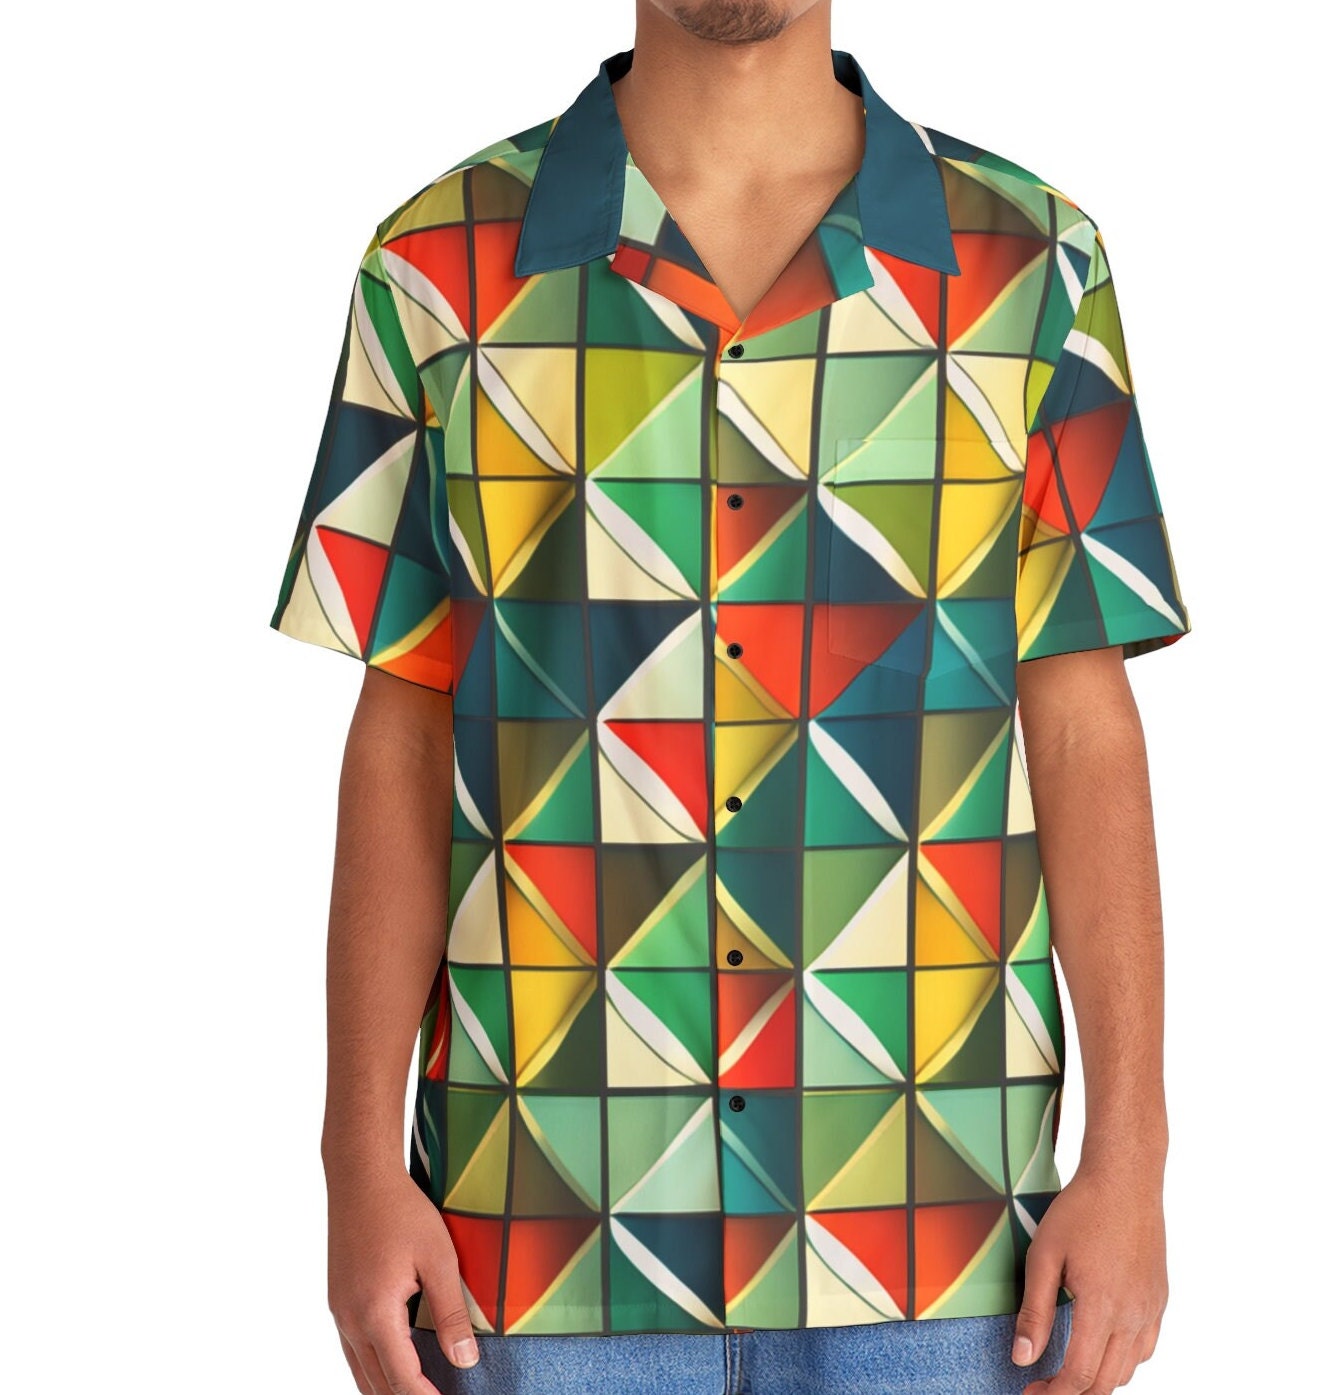 Geometric Pattern Mens Hawaiian Shirt - Retro Style Aloha Shirt for Beach or Party